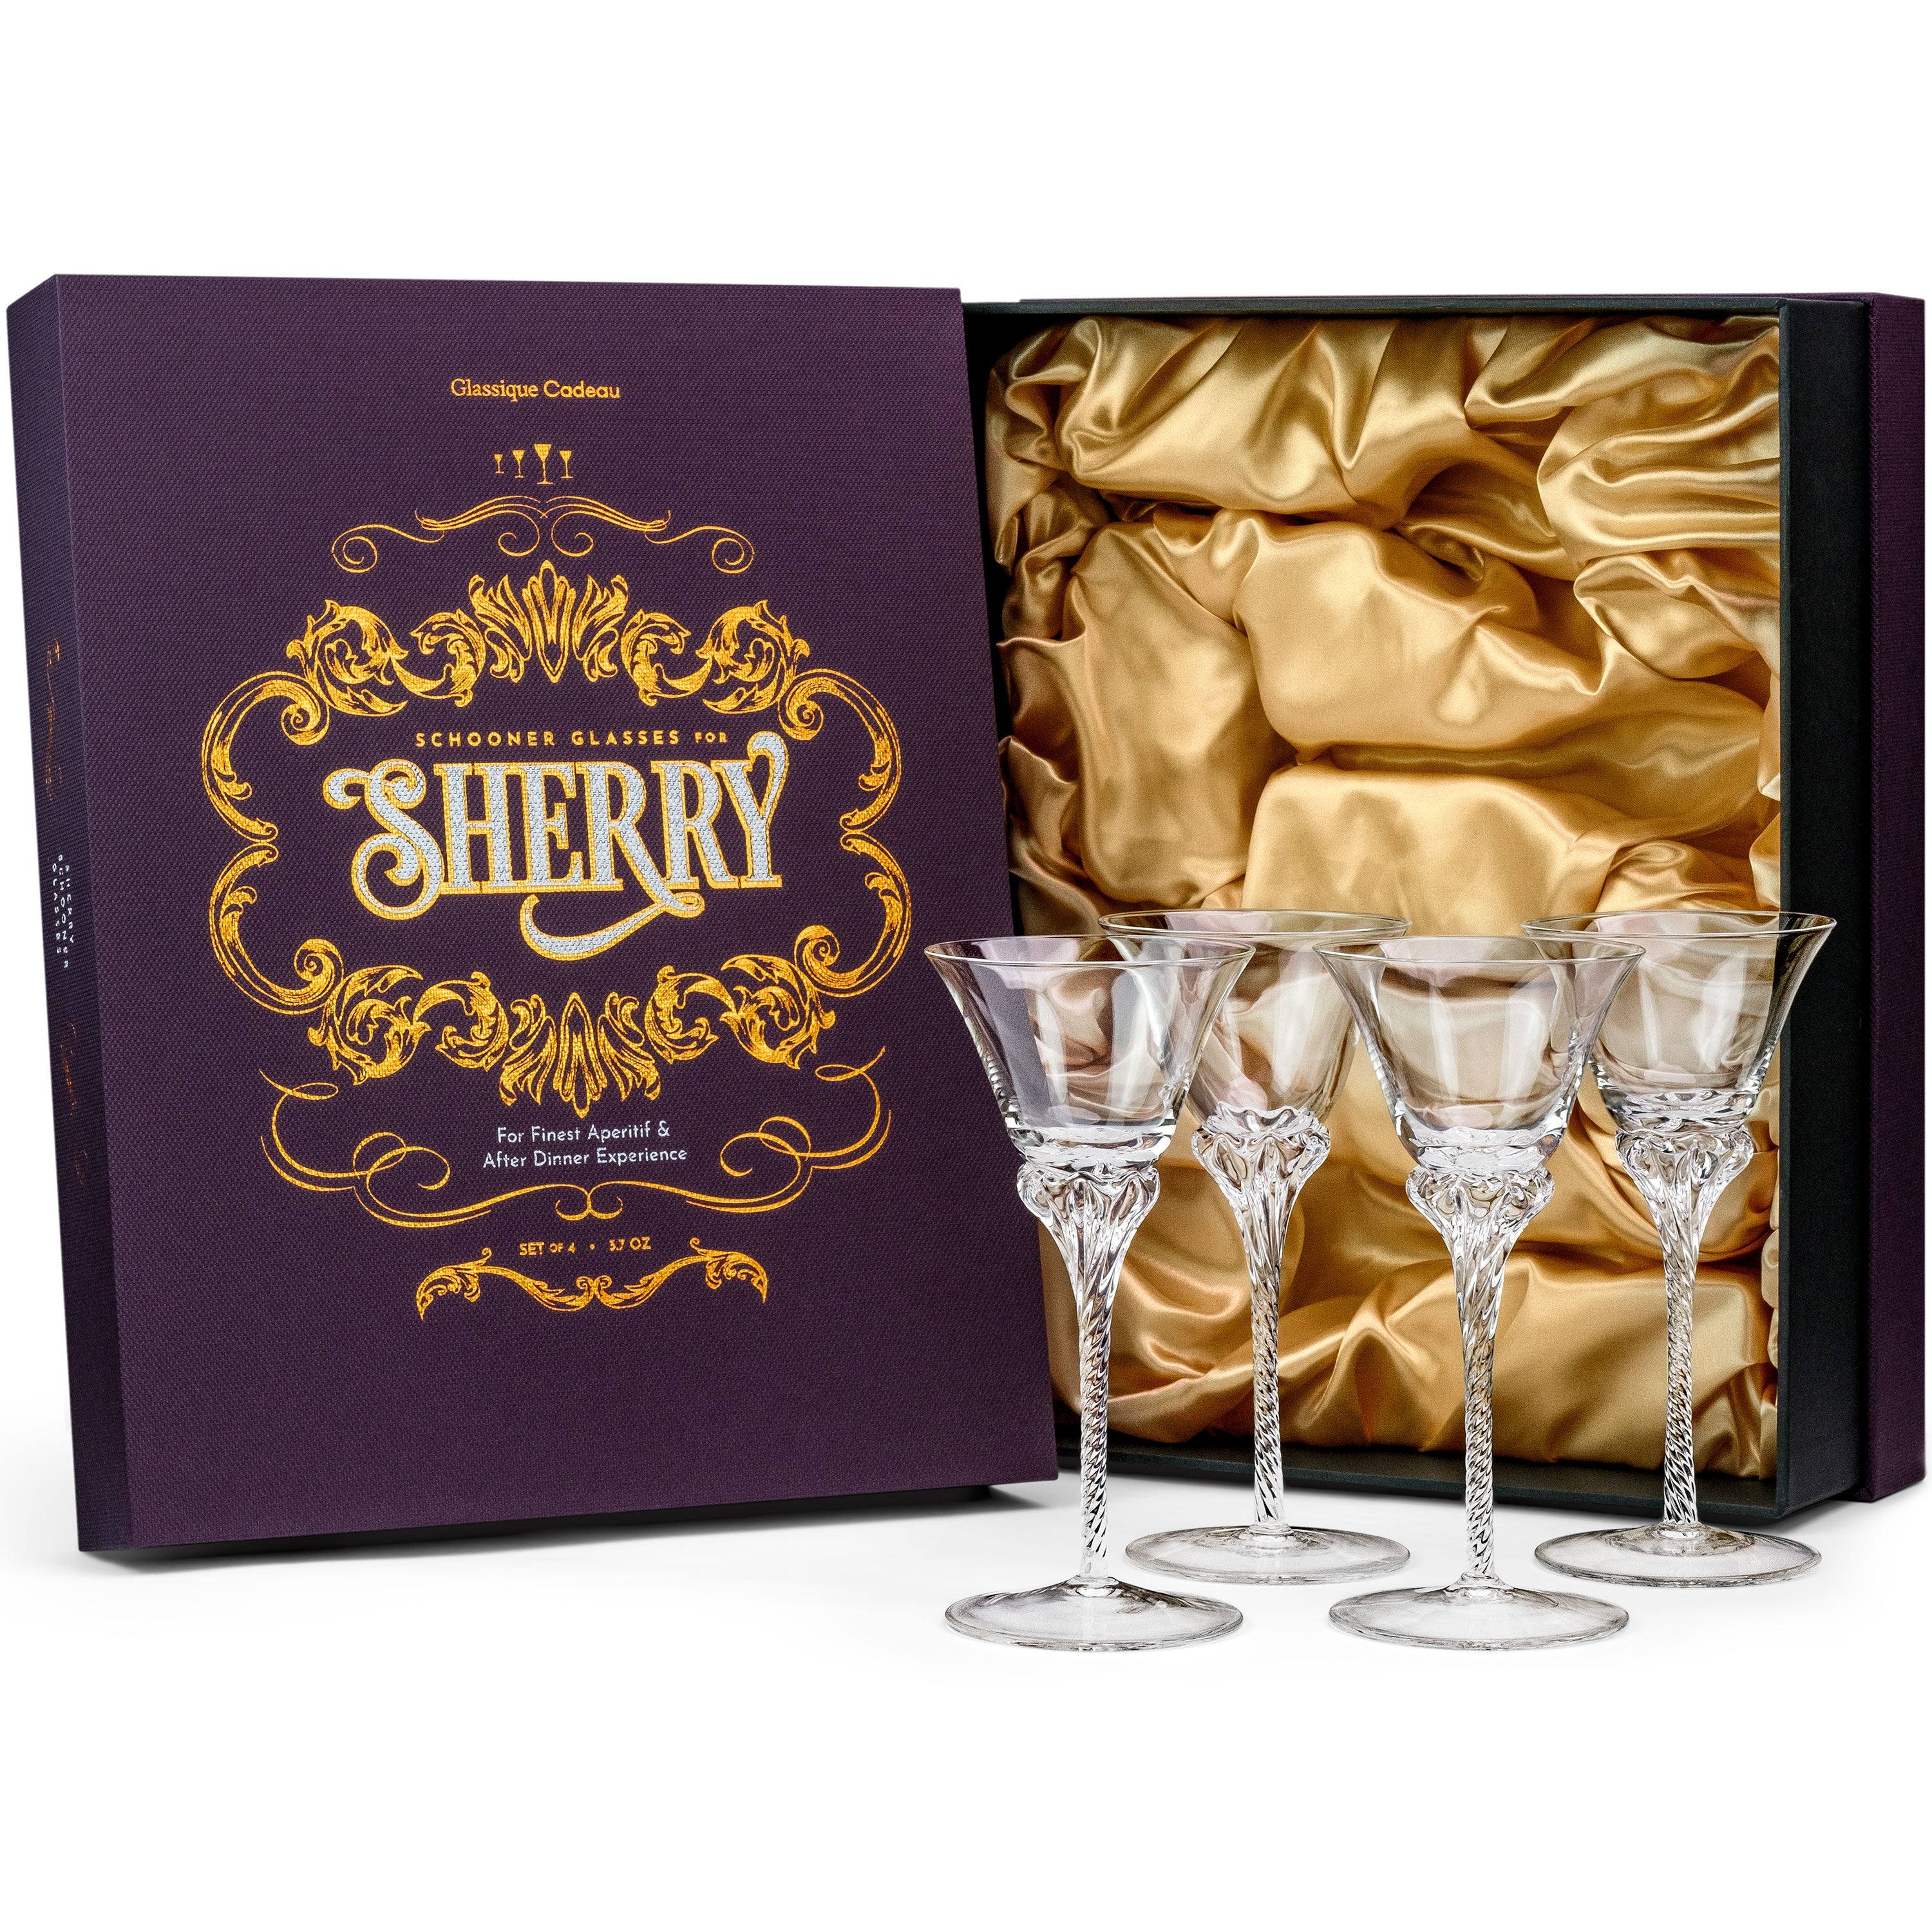 sherry wine glass